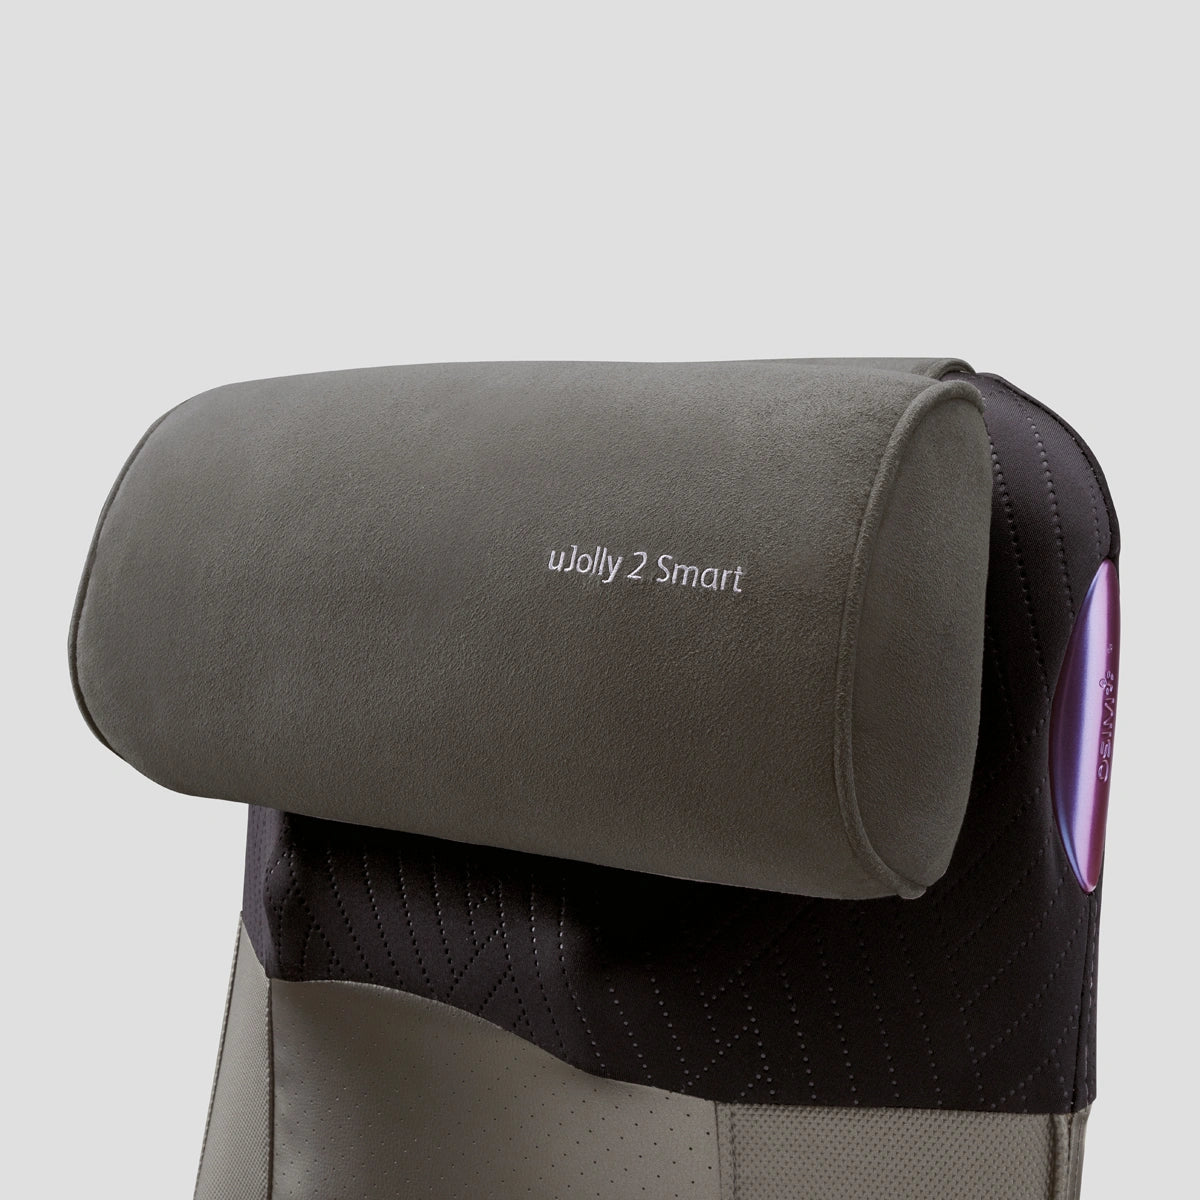 ujolly 2 smart back massager headrest image